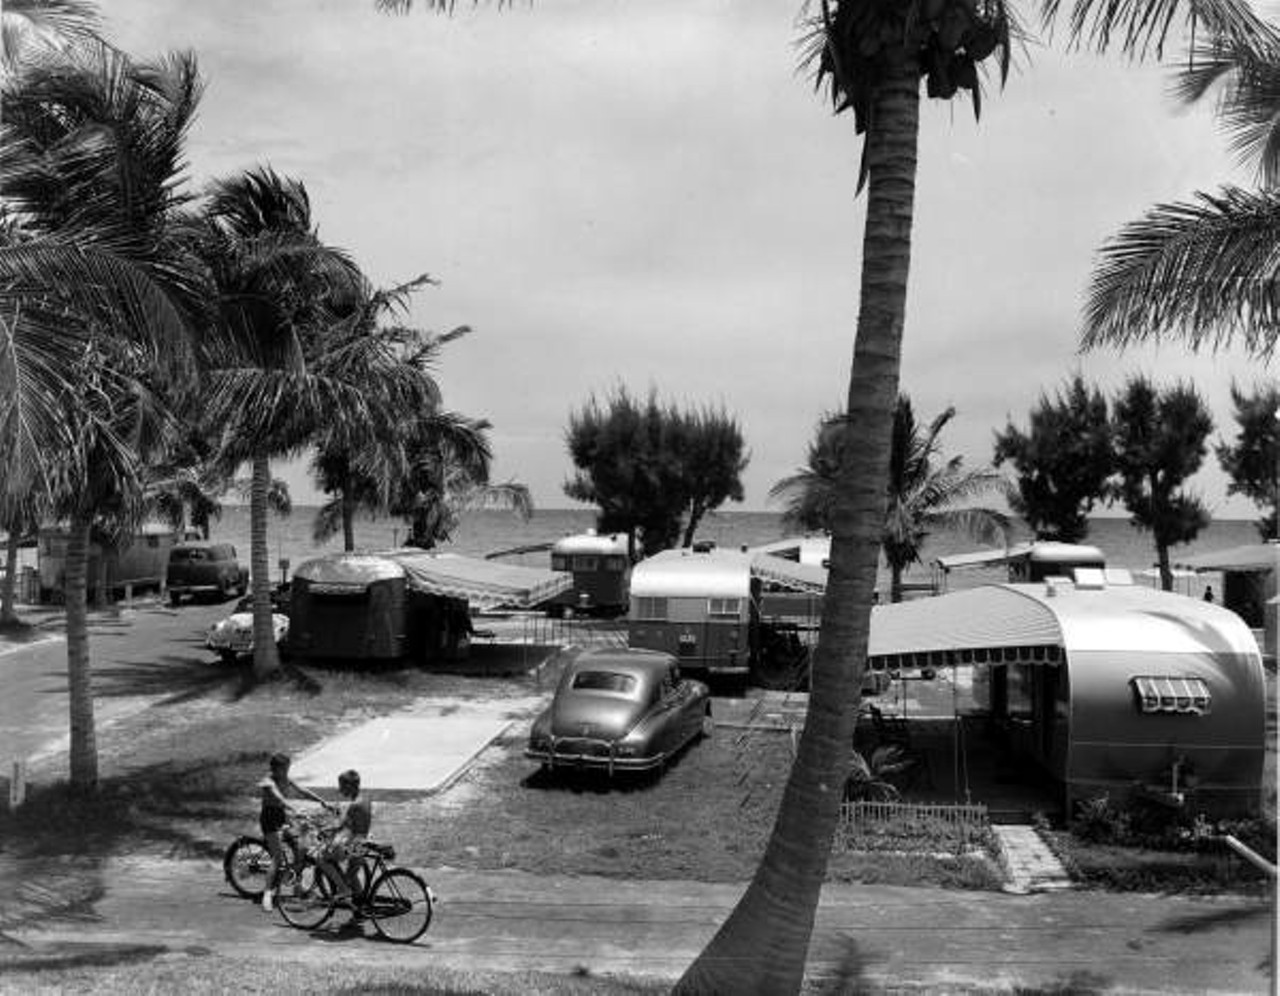 Hollywood camp on the ocean, 1950